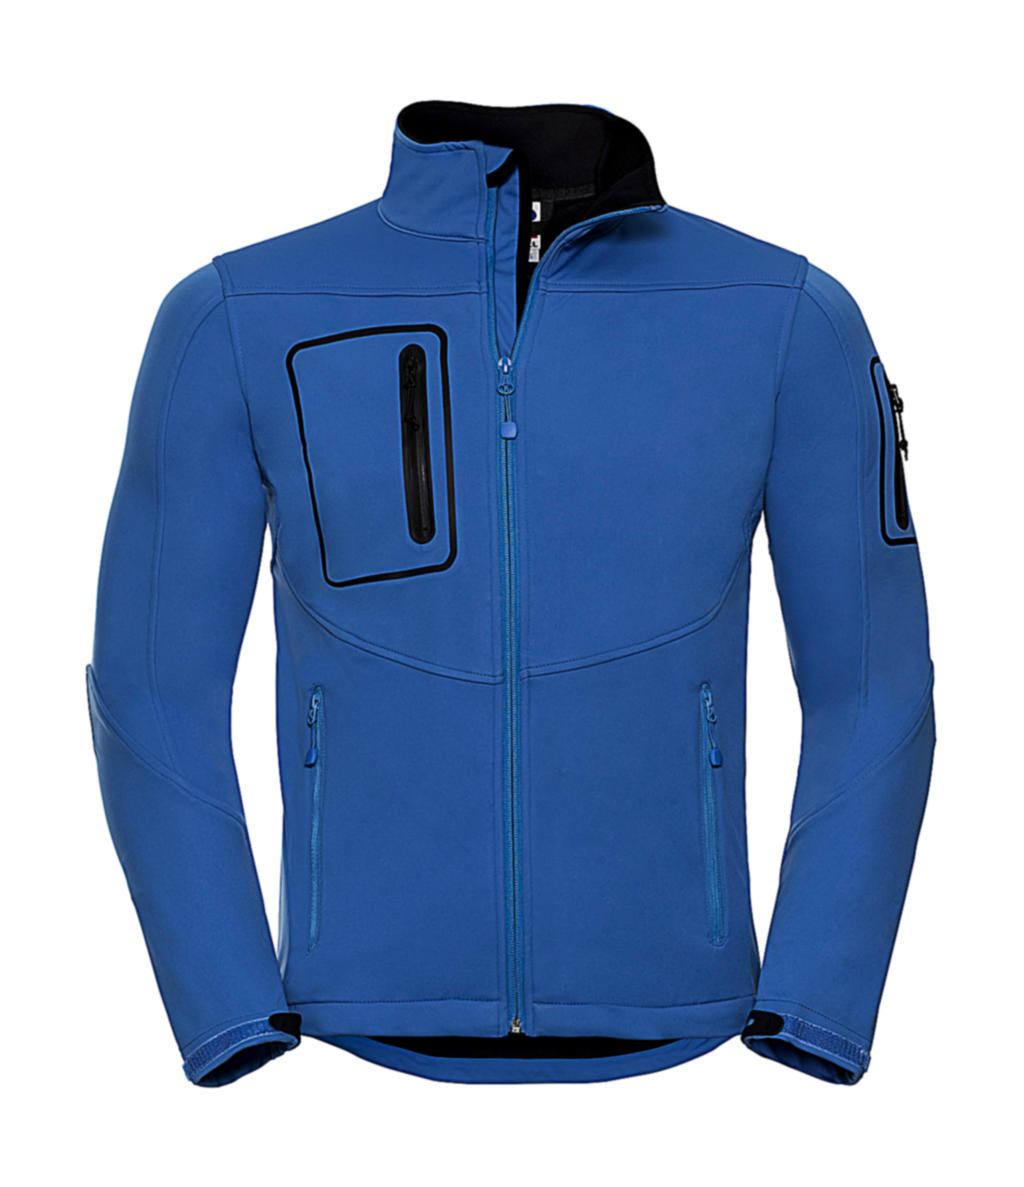  Mens Sportshell 5000 Jacket in Farbe Azure